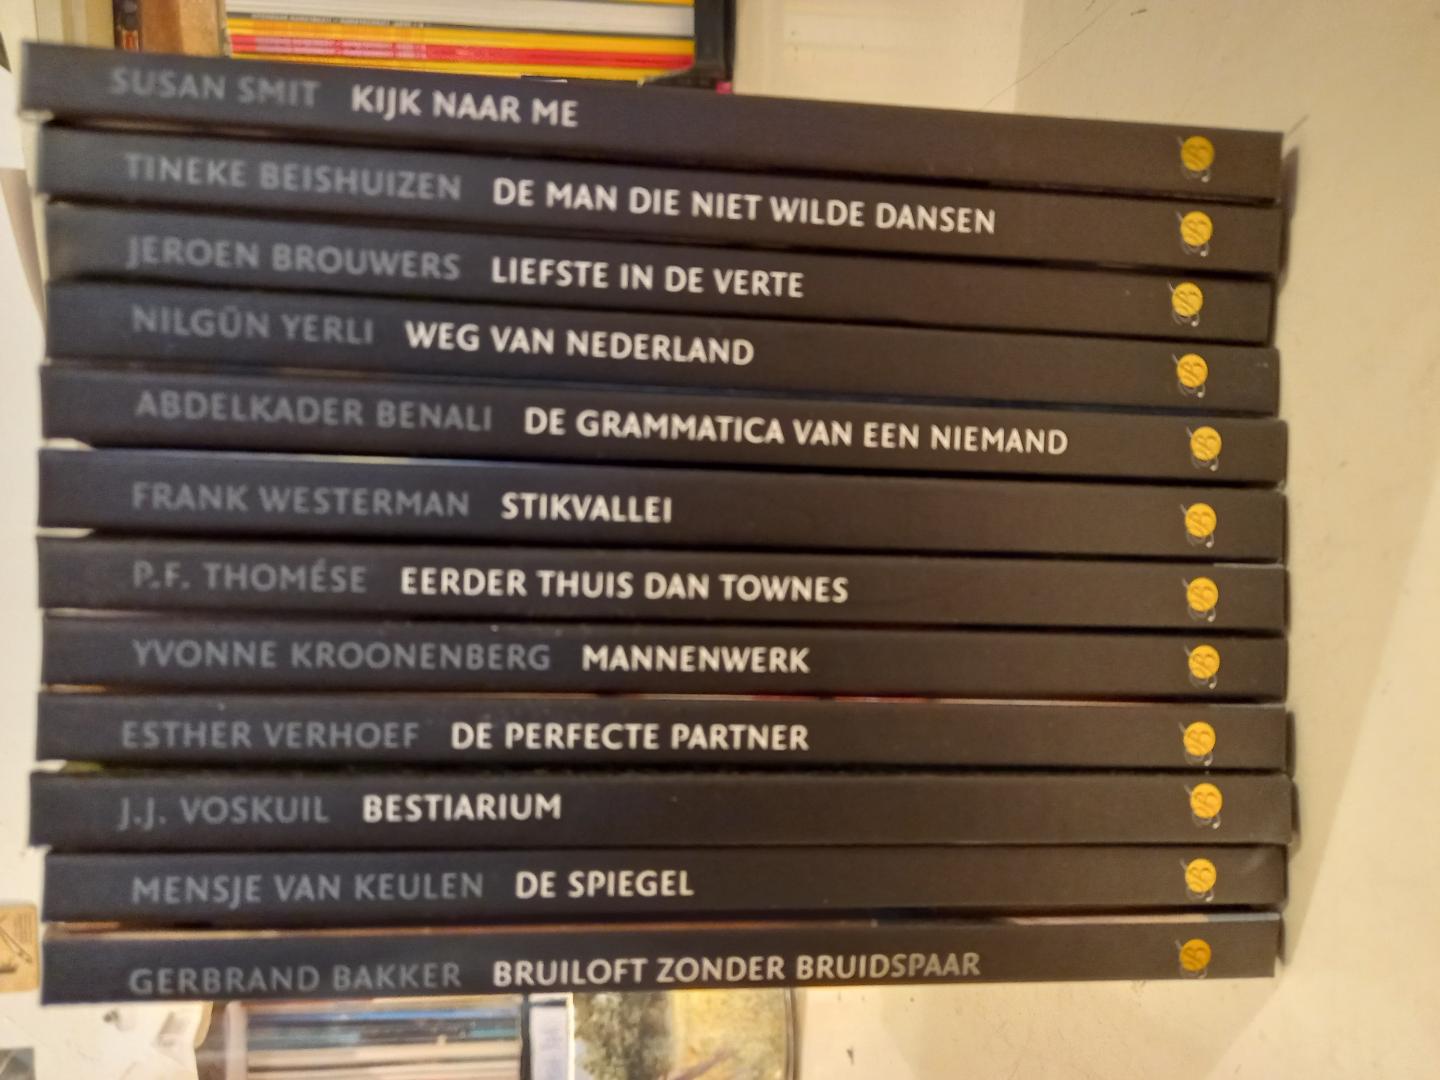 Bakker e.a., Gerbrand - Literaire Juweeltjes: Complete Jaargang 2008